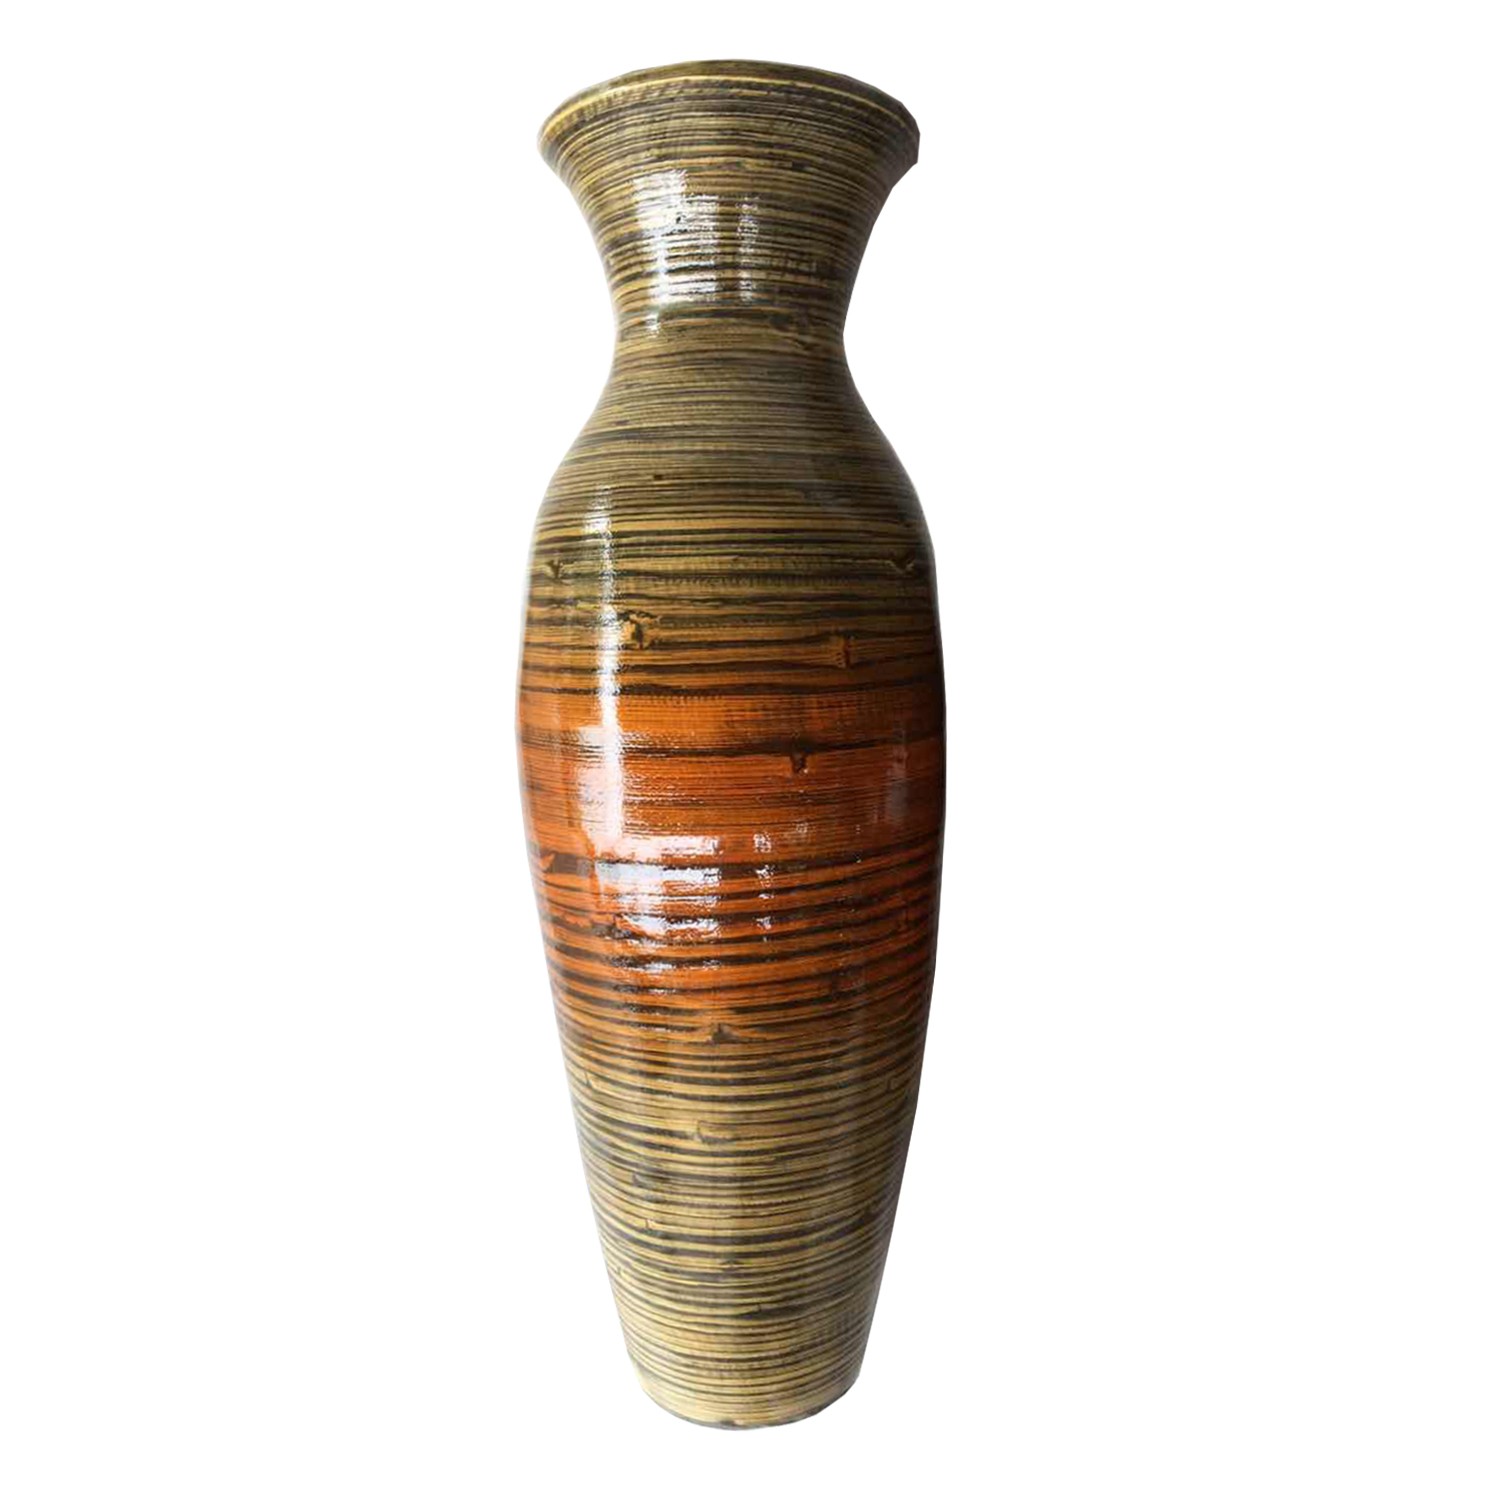 29.5" Tall Distressed Gold Spun Bamboo Floor Vase